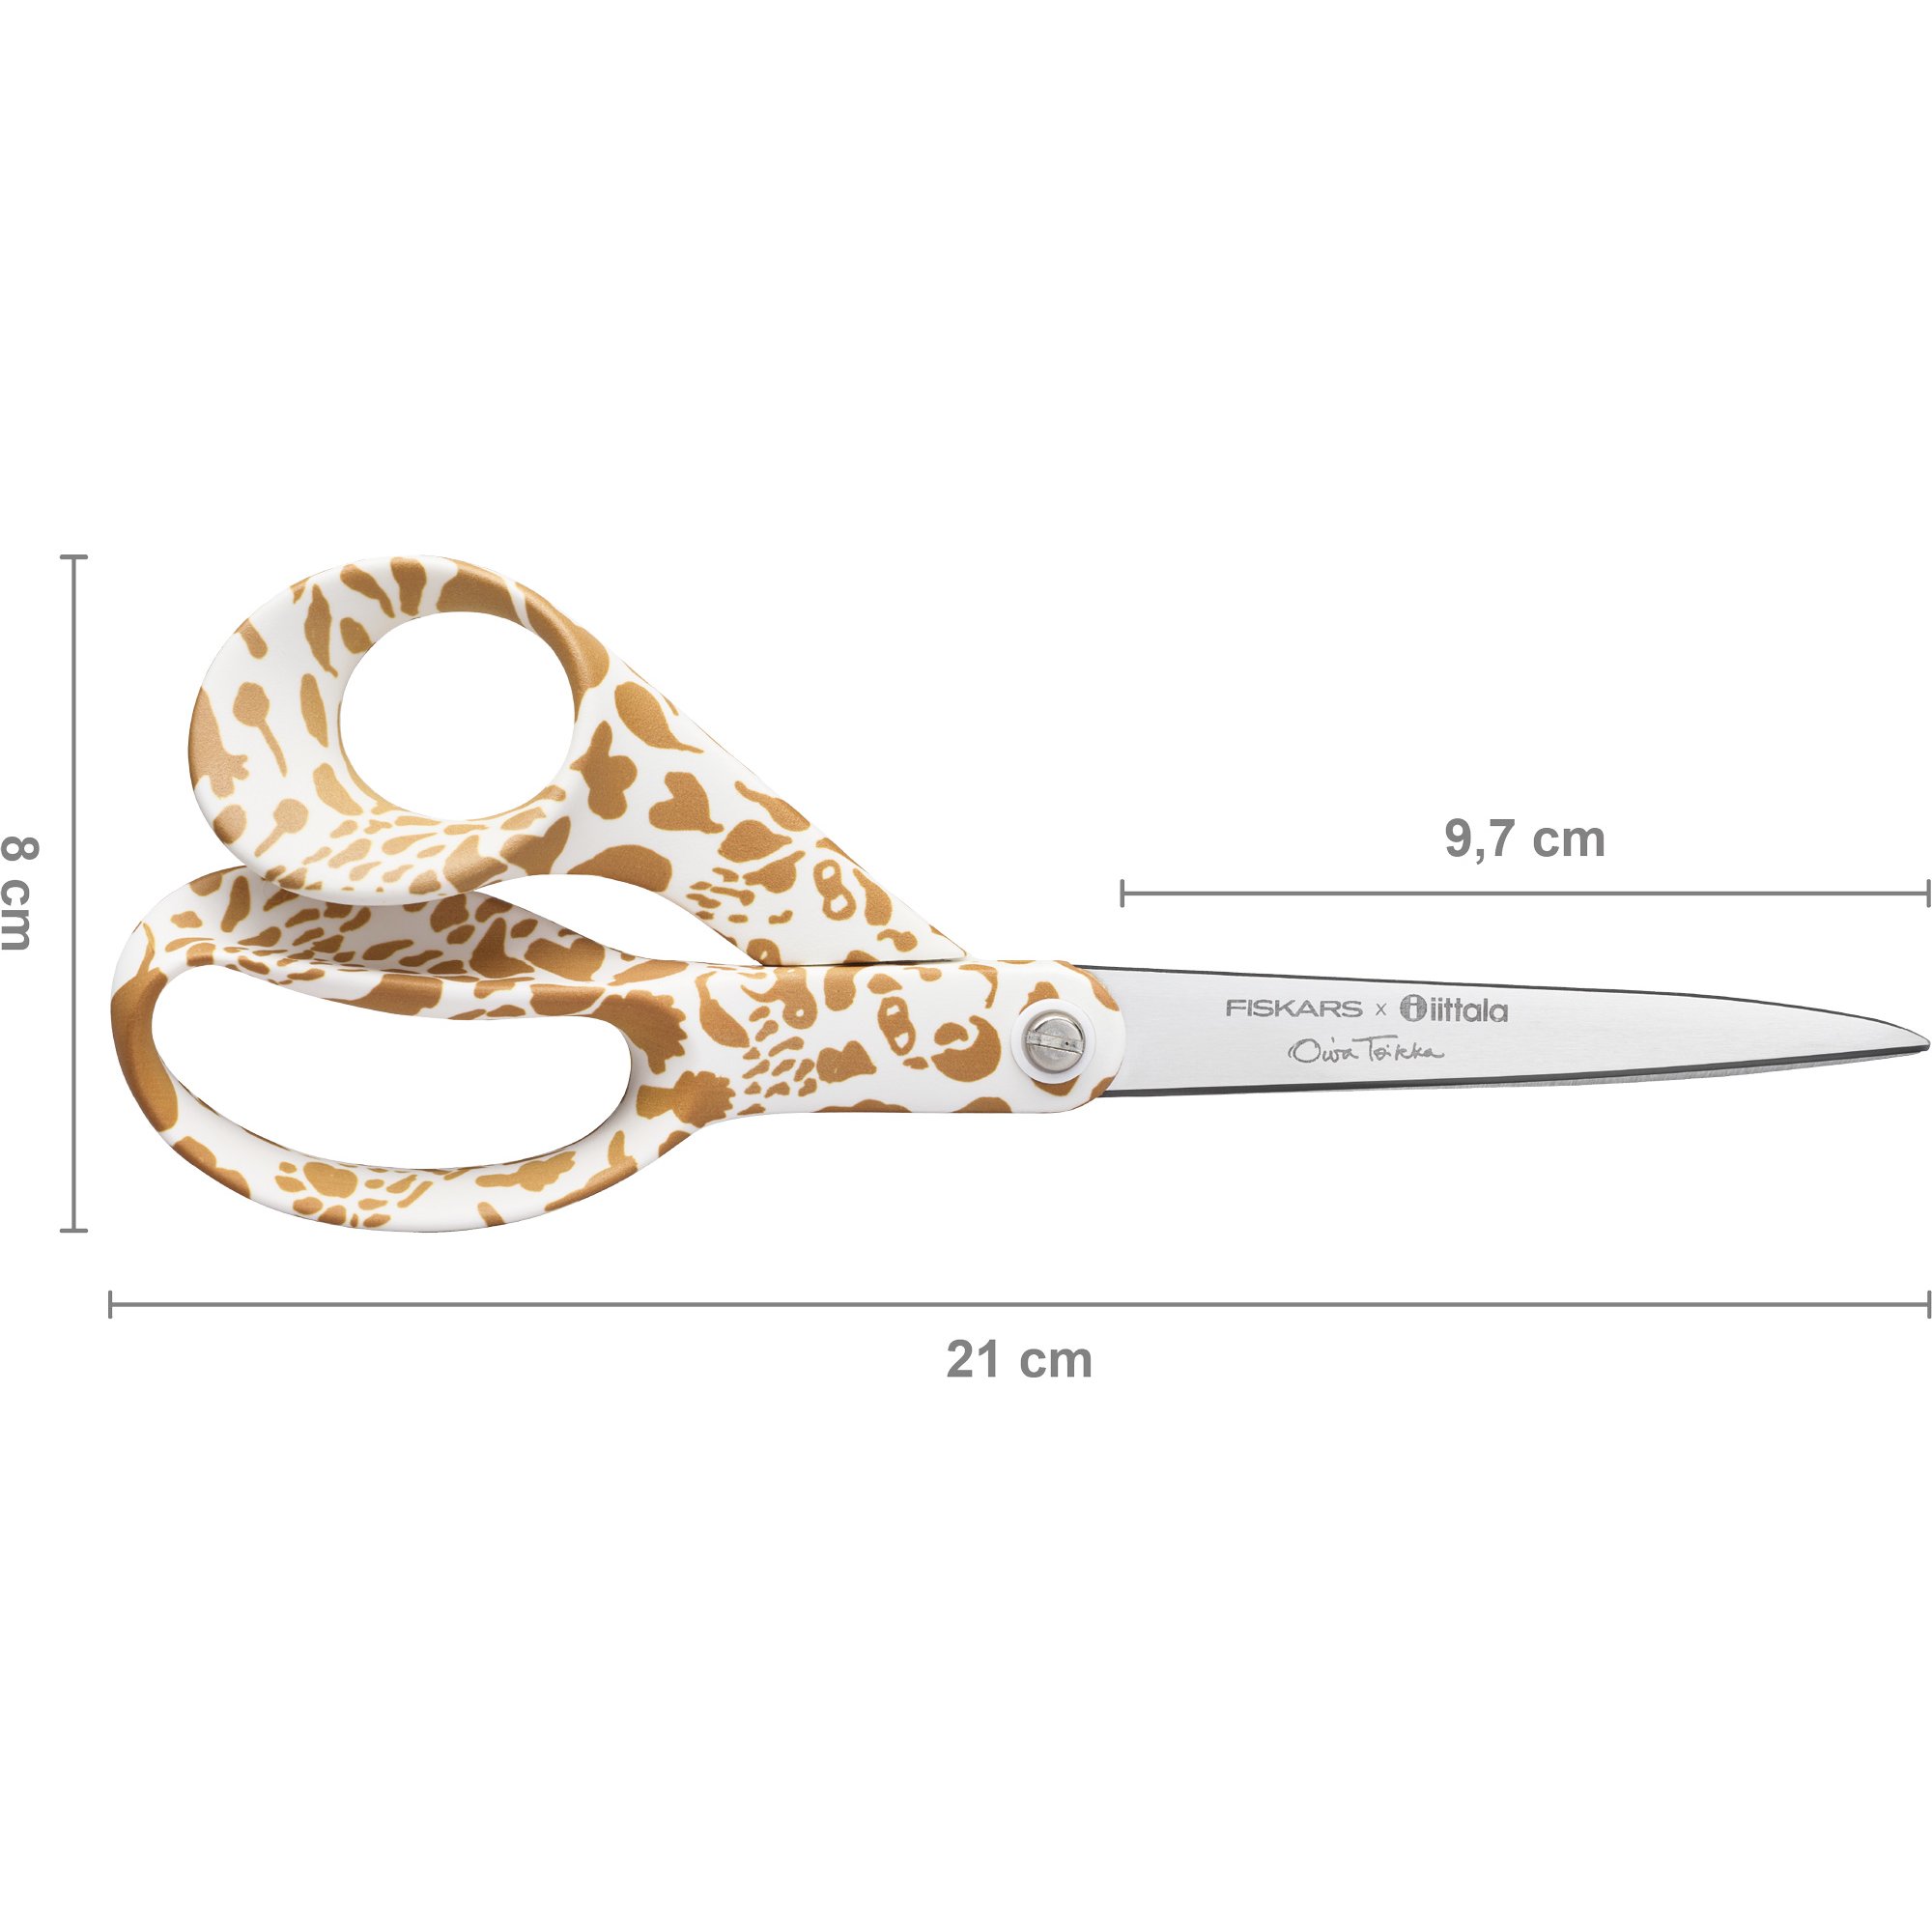 Fiskars Iittala universalsax 21 cm, Cheeta brun